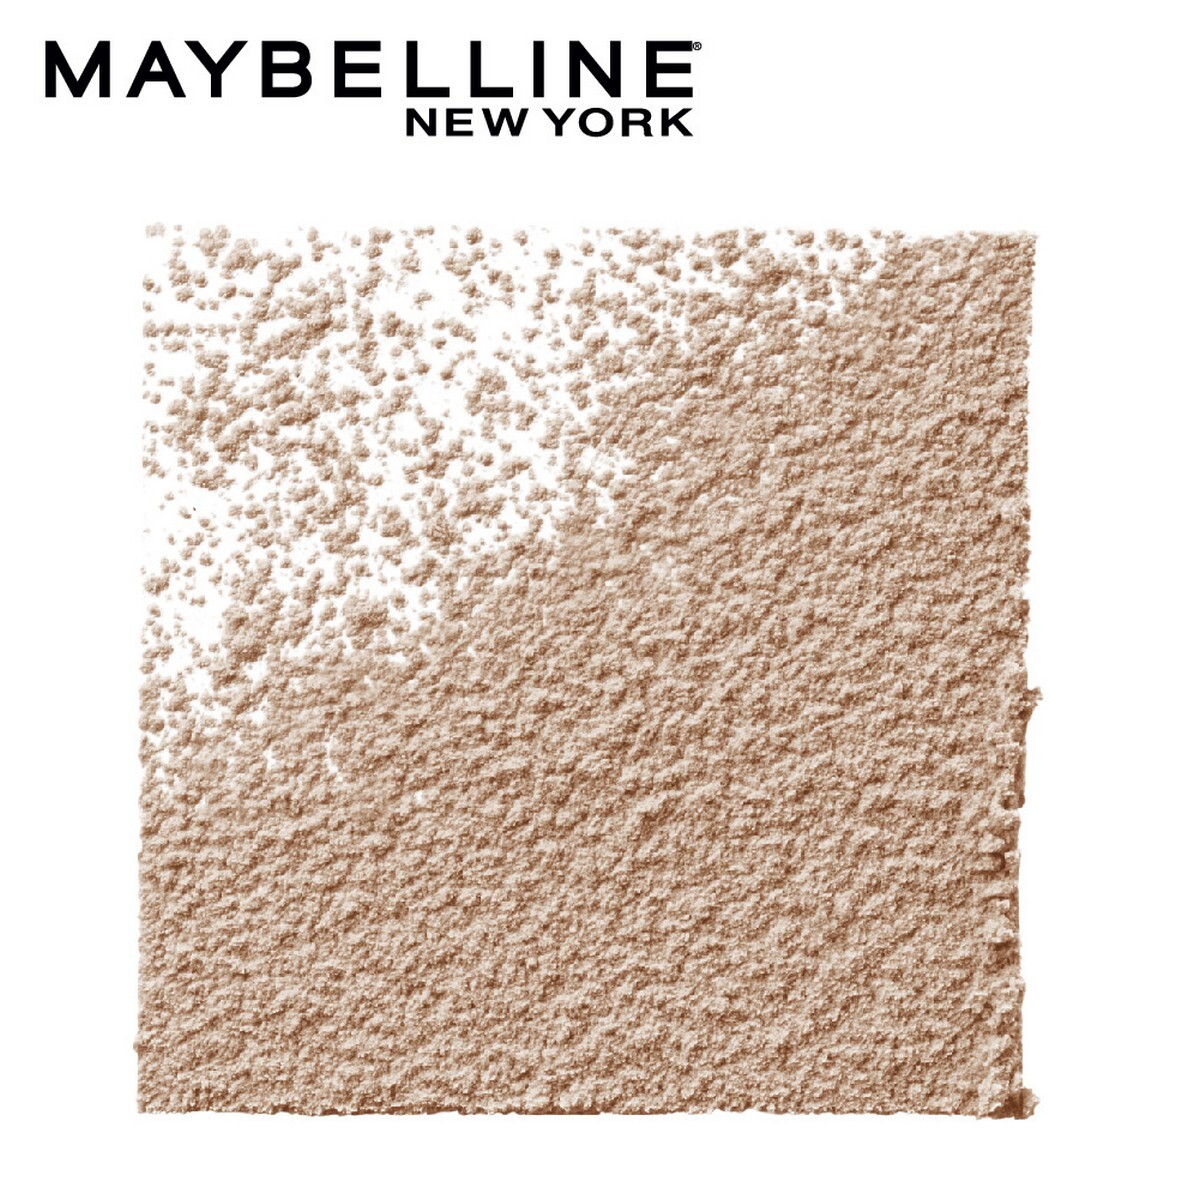 Maybelline New York Fit me Loose Finishing Powder,25 Medium